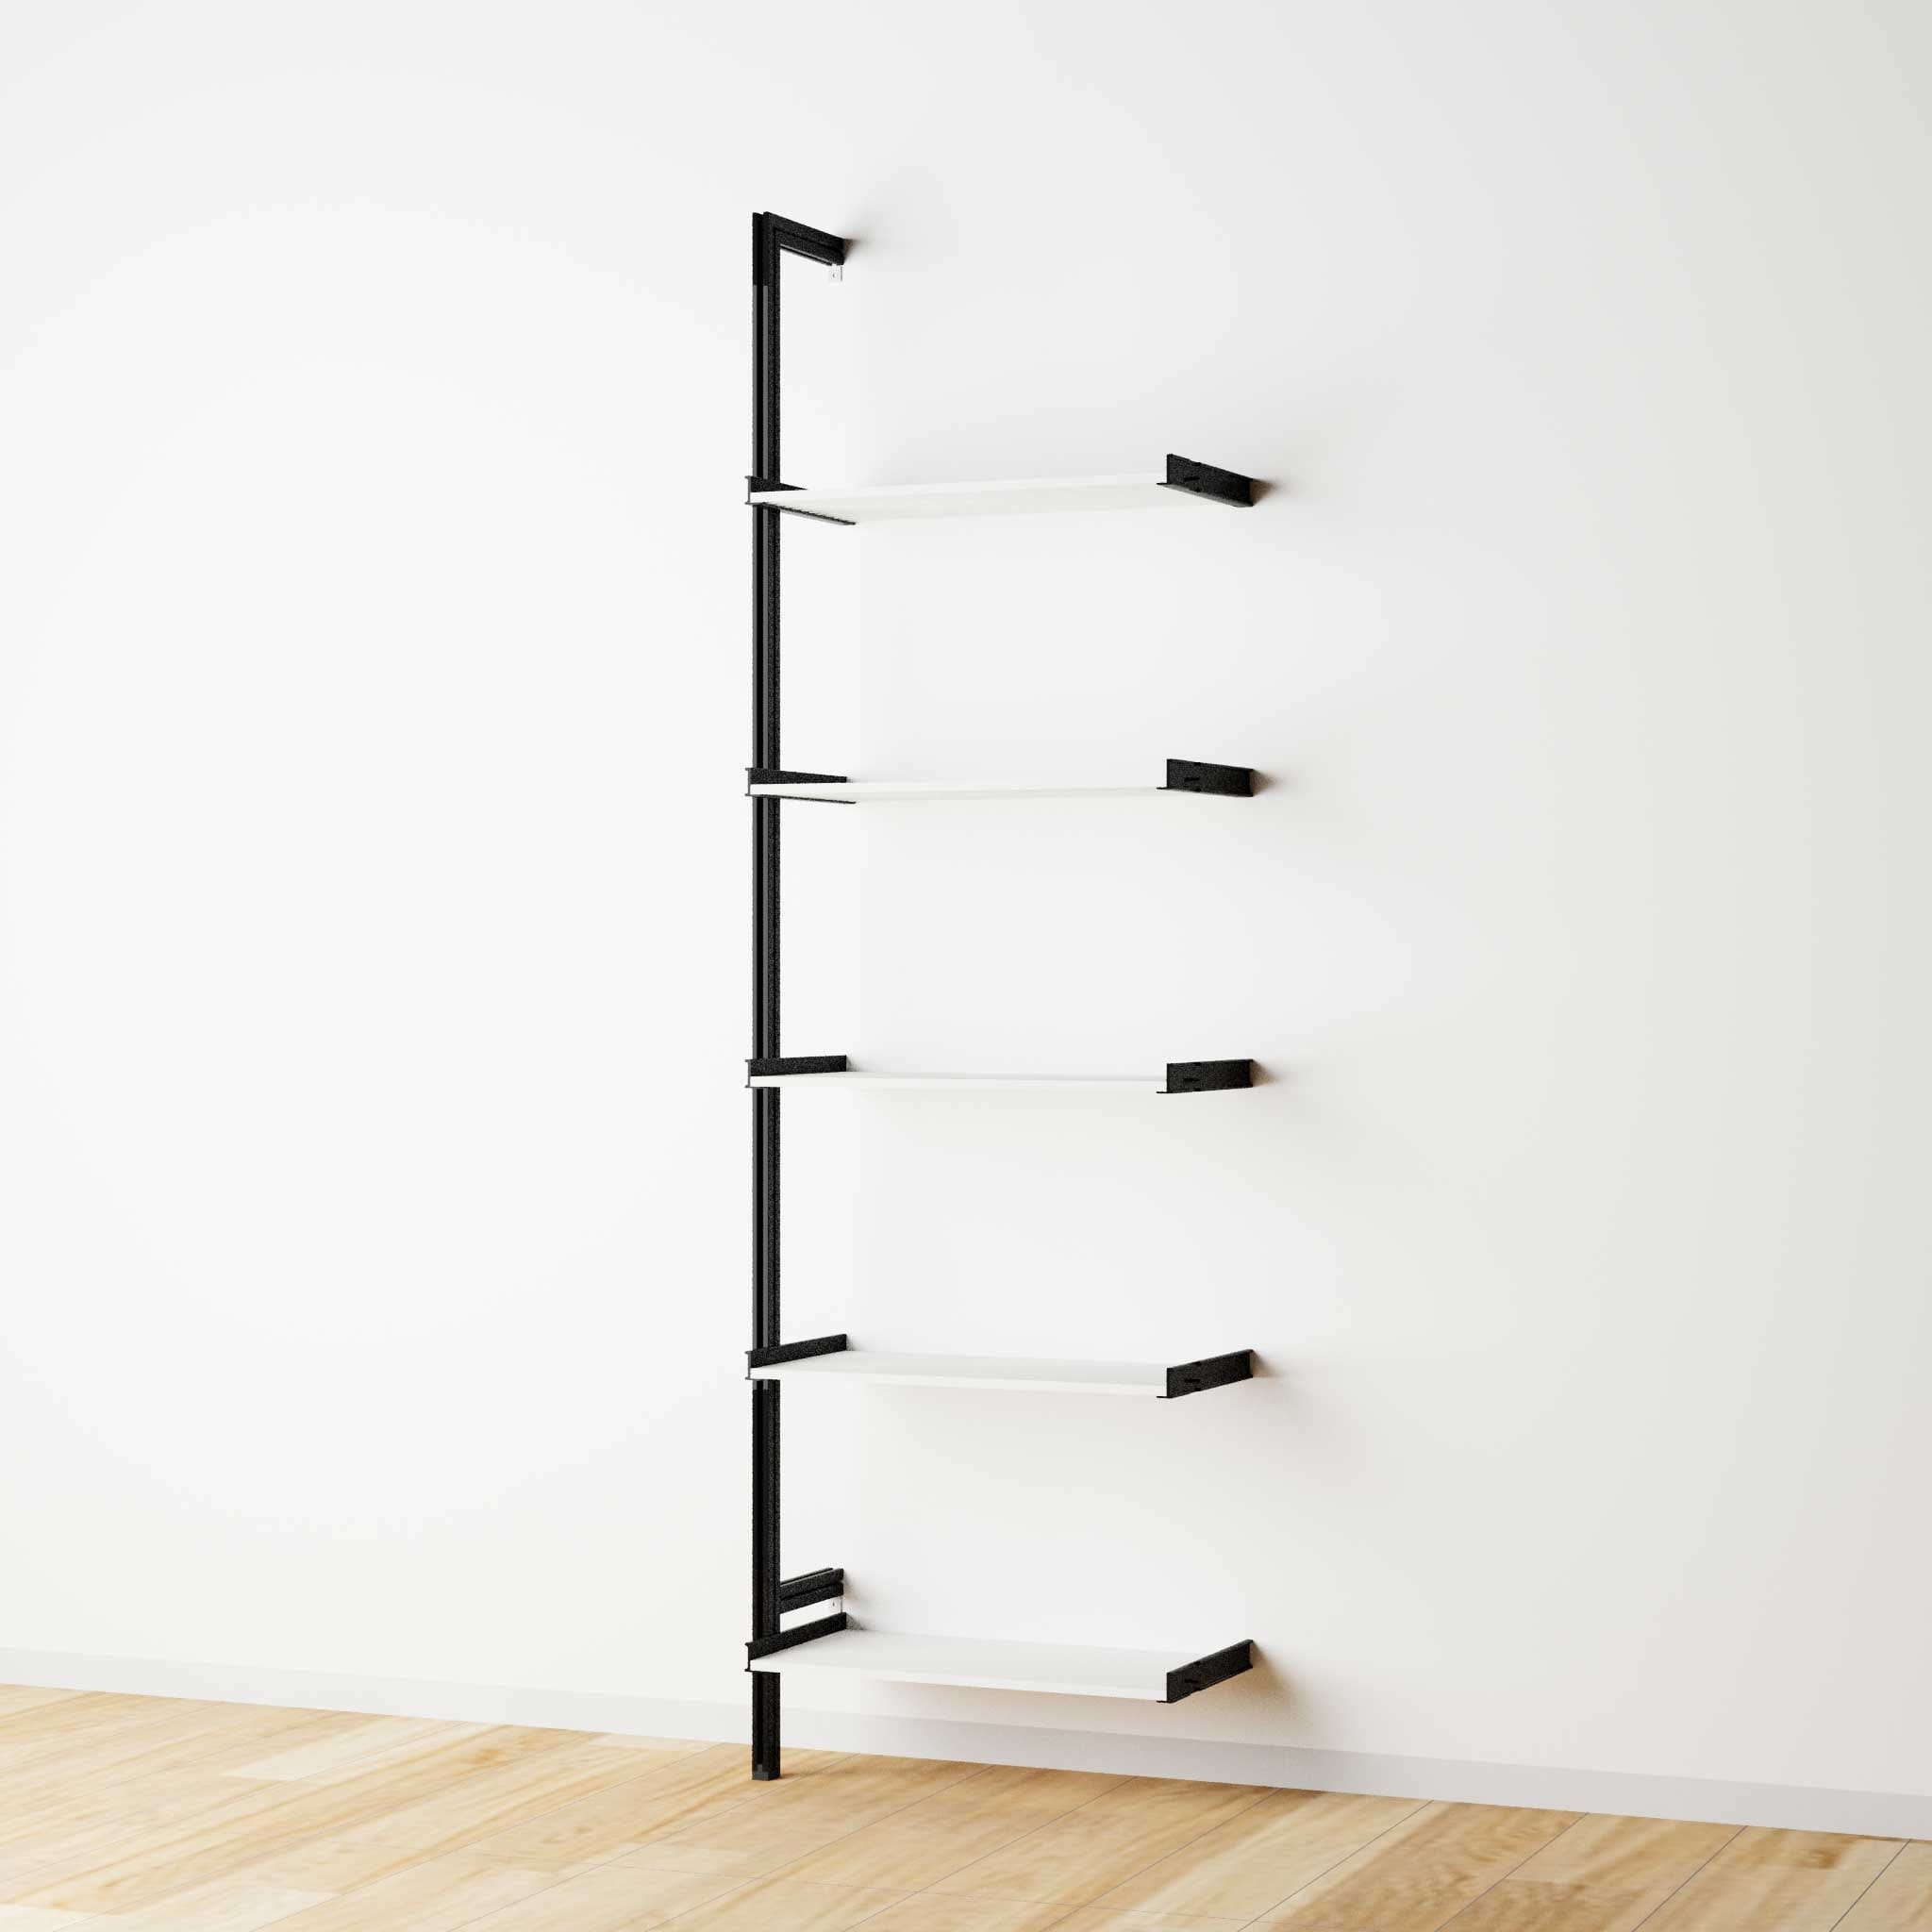 Modular Shelving Units - Aluminum Shelves